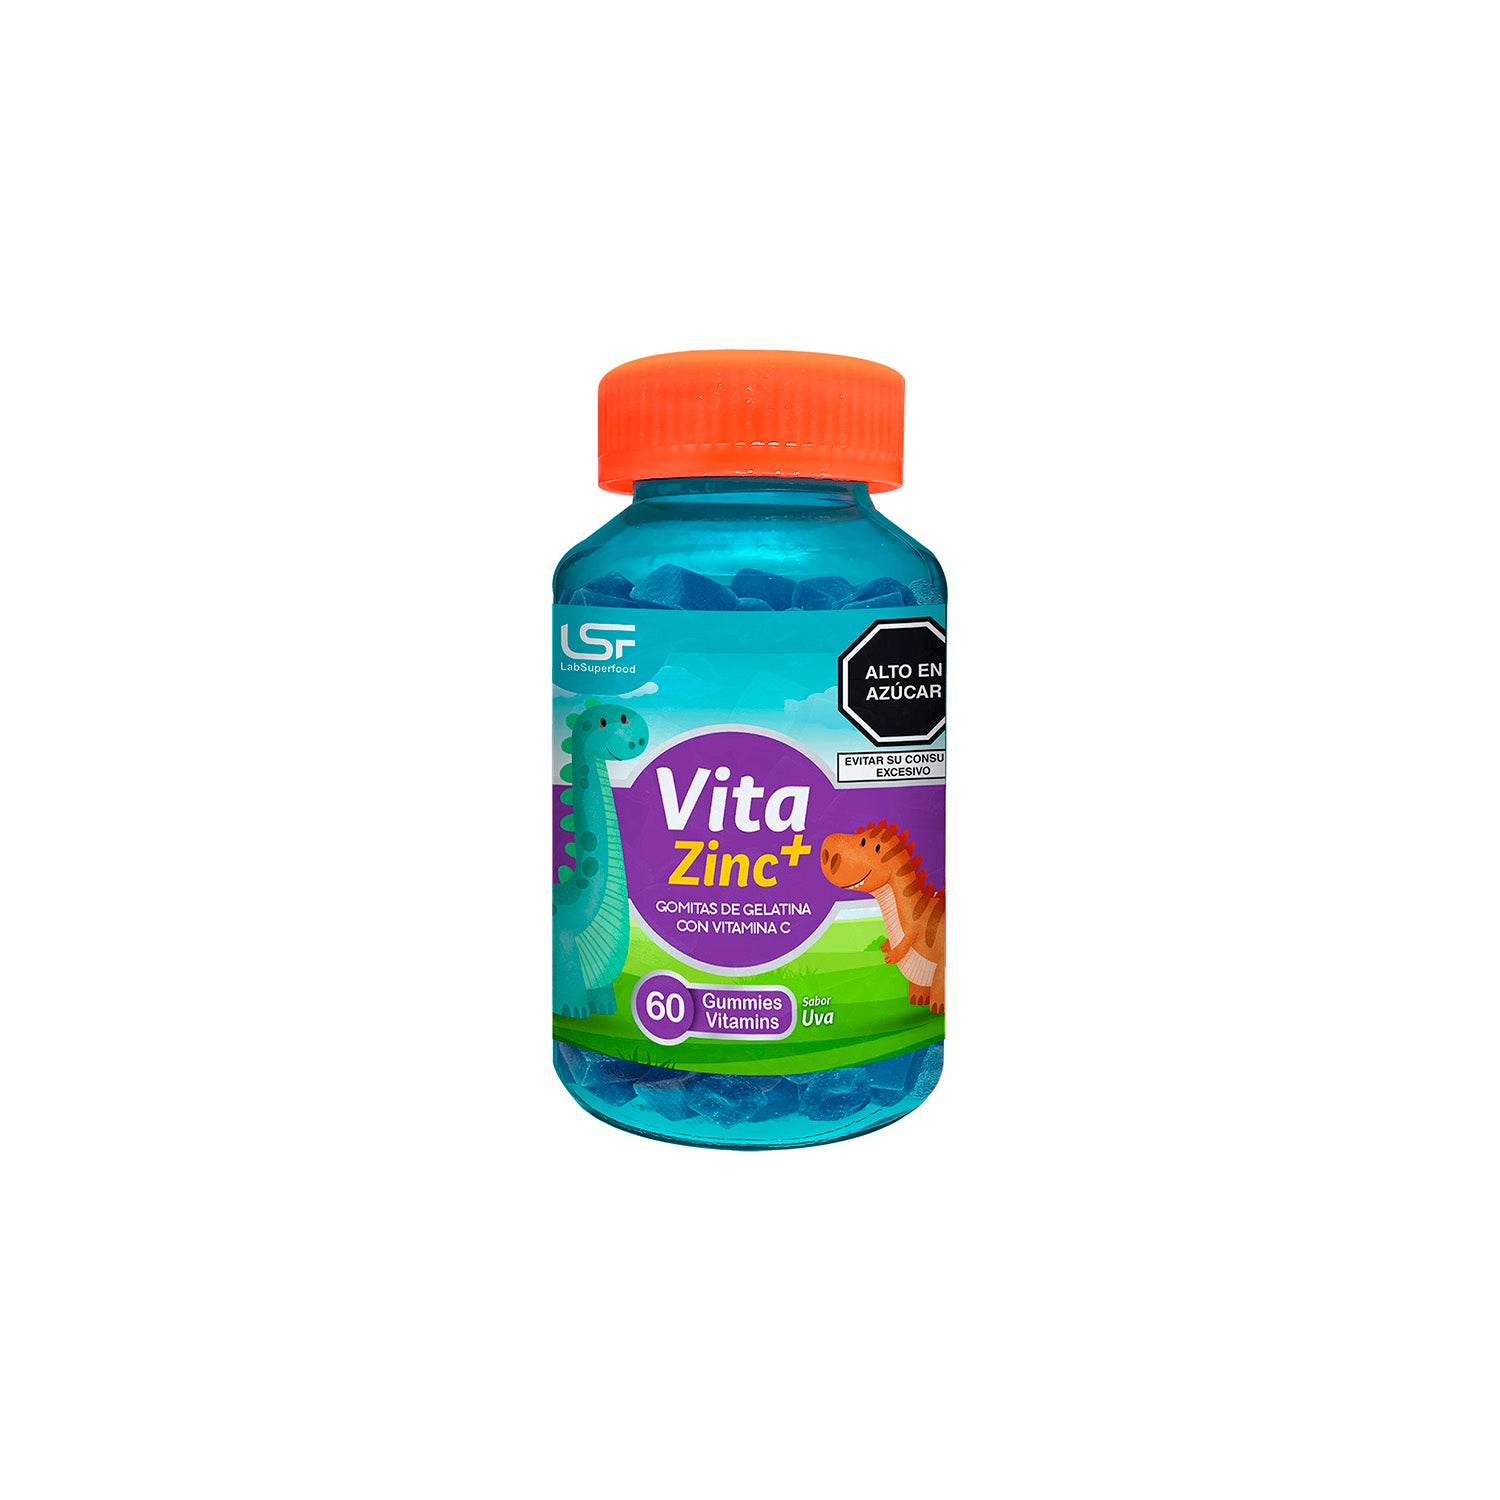 Vita Zinc+ - Grape Flavor - 60 gummies